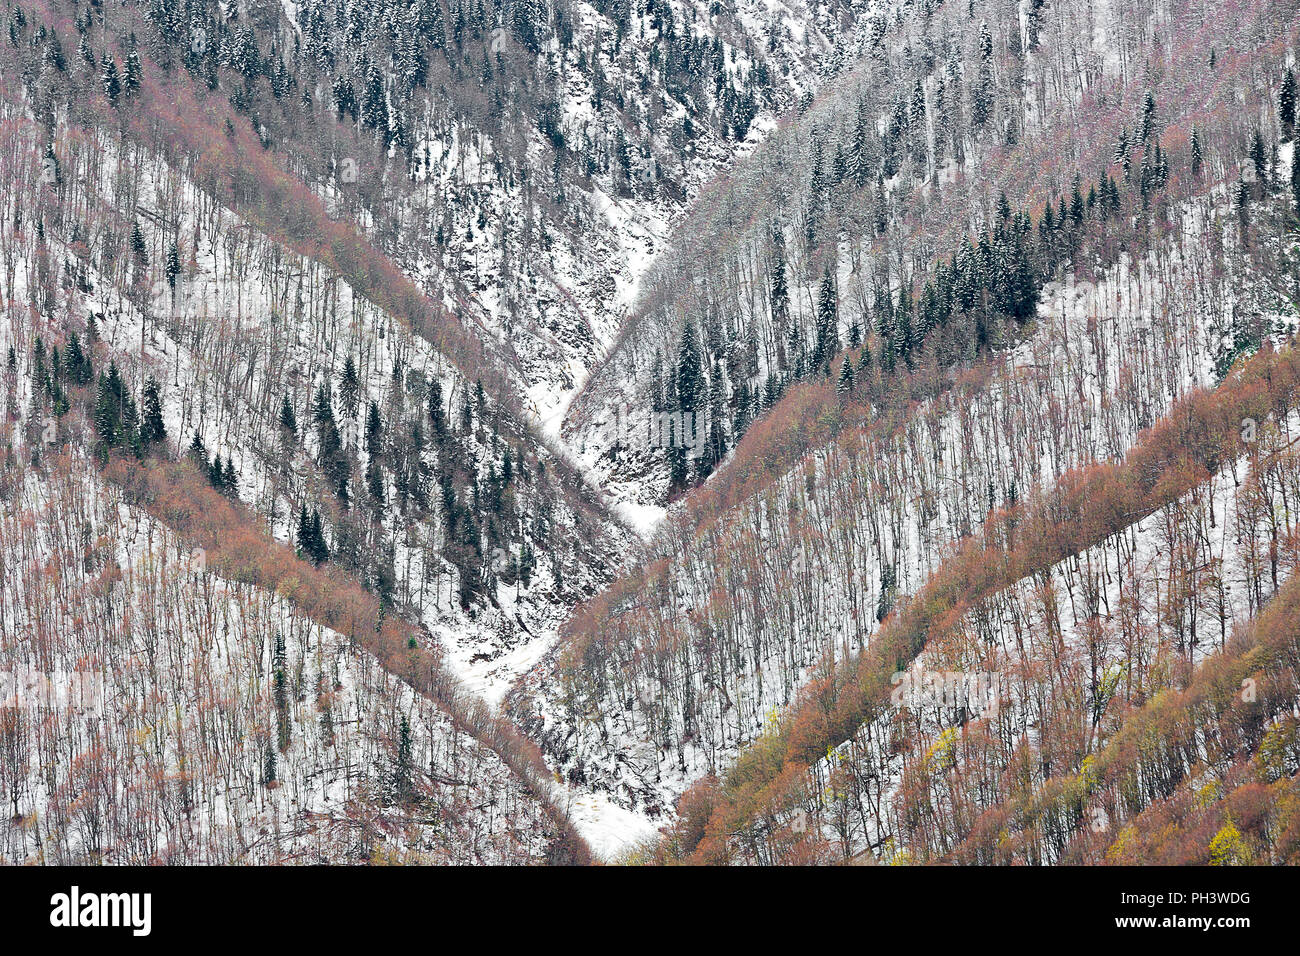 Caucasus Mountains in the winter in Georgia Stock Photo